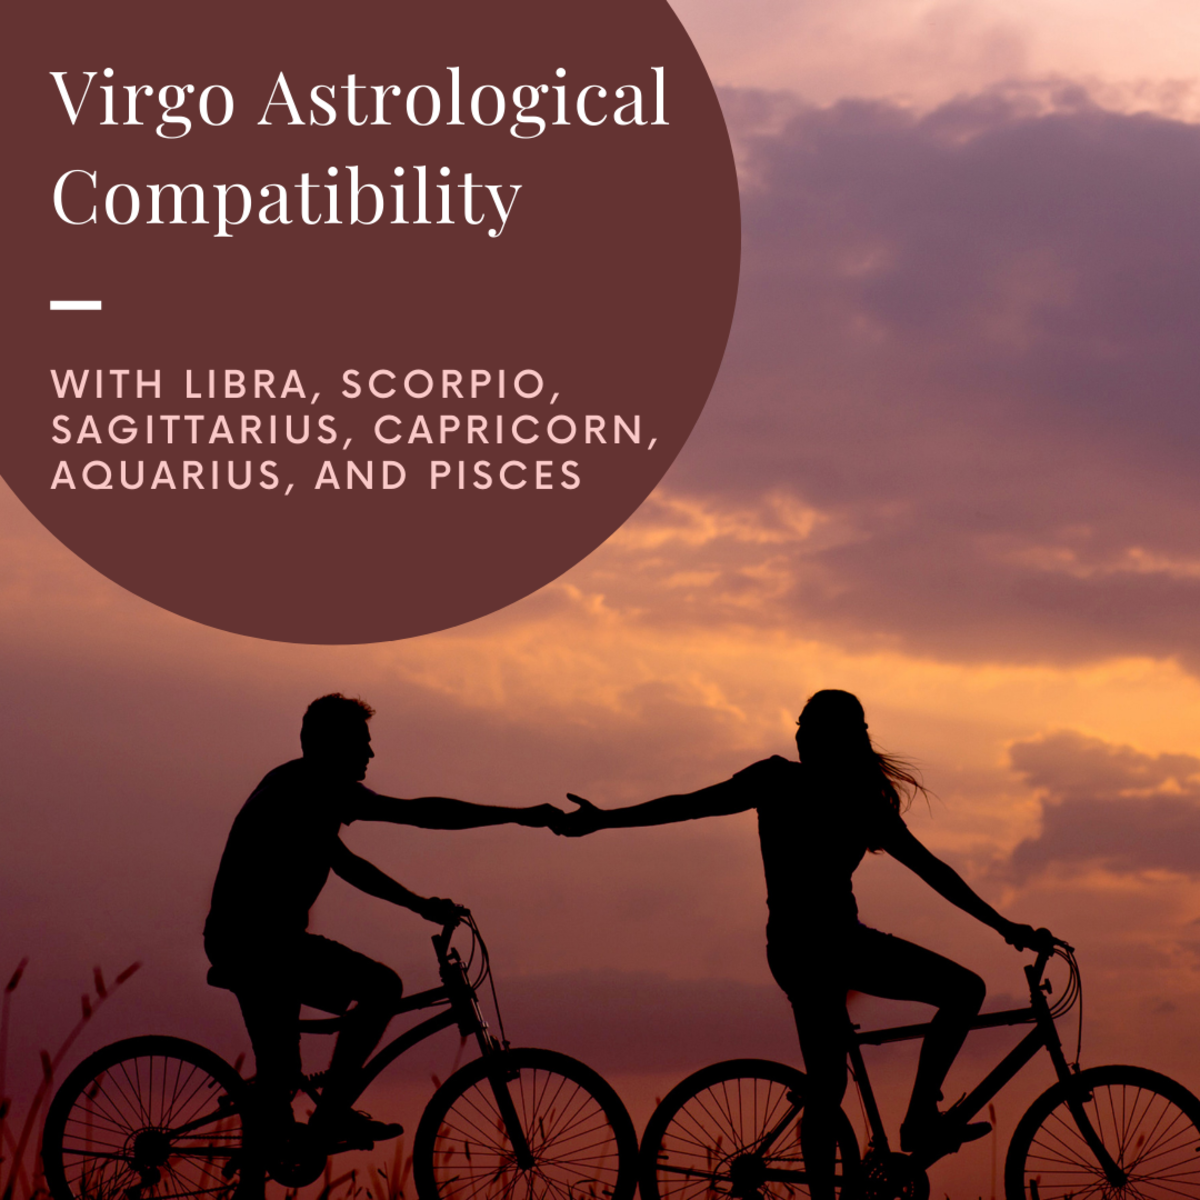 A Virgo Woman's Astrological Compatibility With Libra, Scorpio, Sagittarius, Capricorn, Aquarius, and Pisces